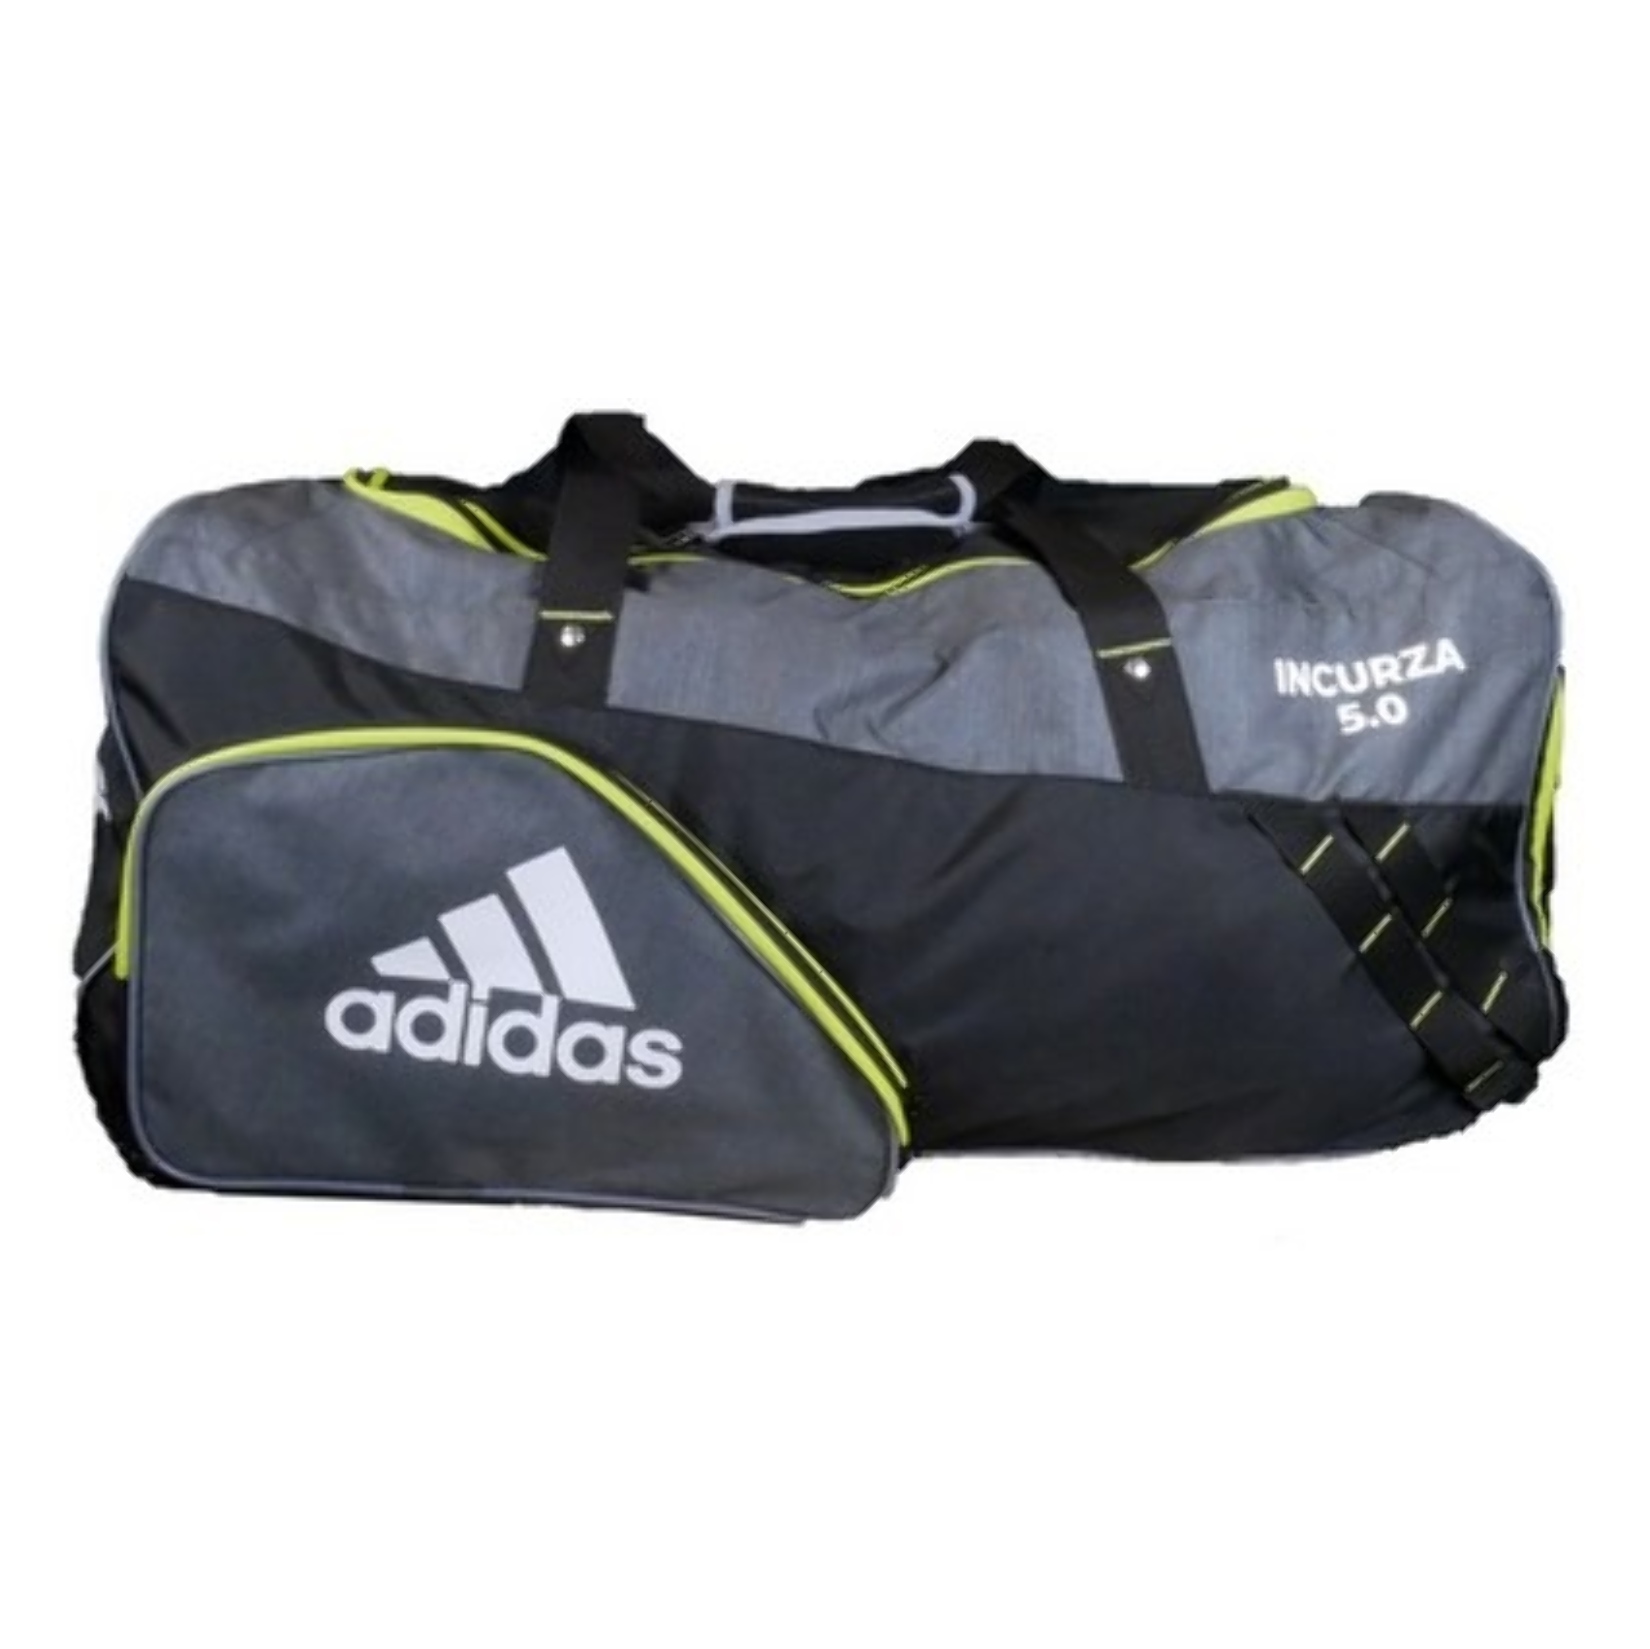 Adidas-LP Incurza 5.0 Wheelie Jnr Bag